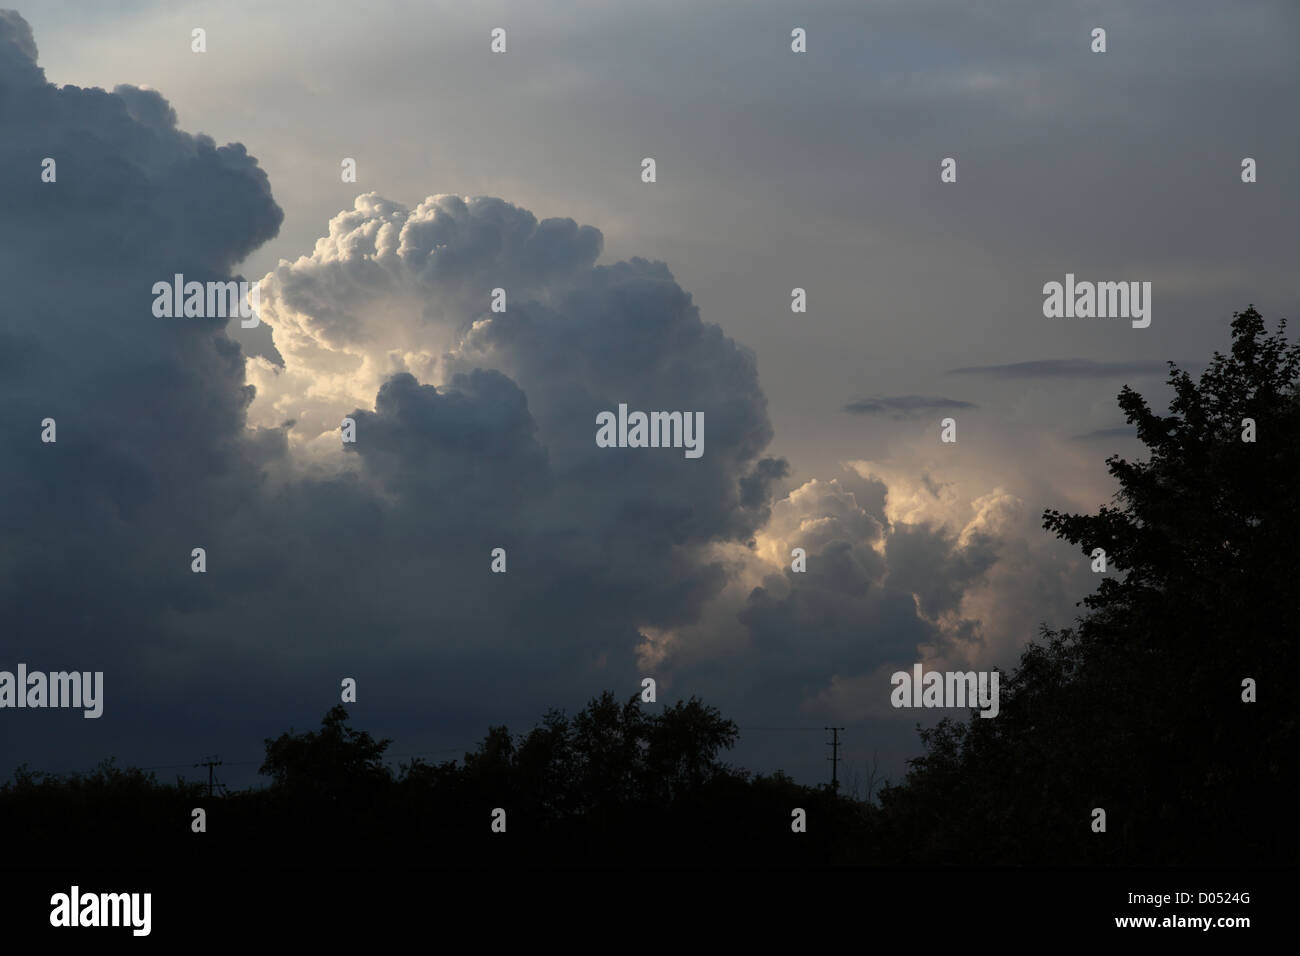 threatening cumulonimbus clouds seen in the UK in the late summer evening threatening a summer storm Stock Photo